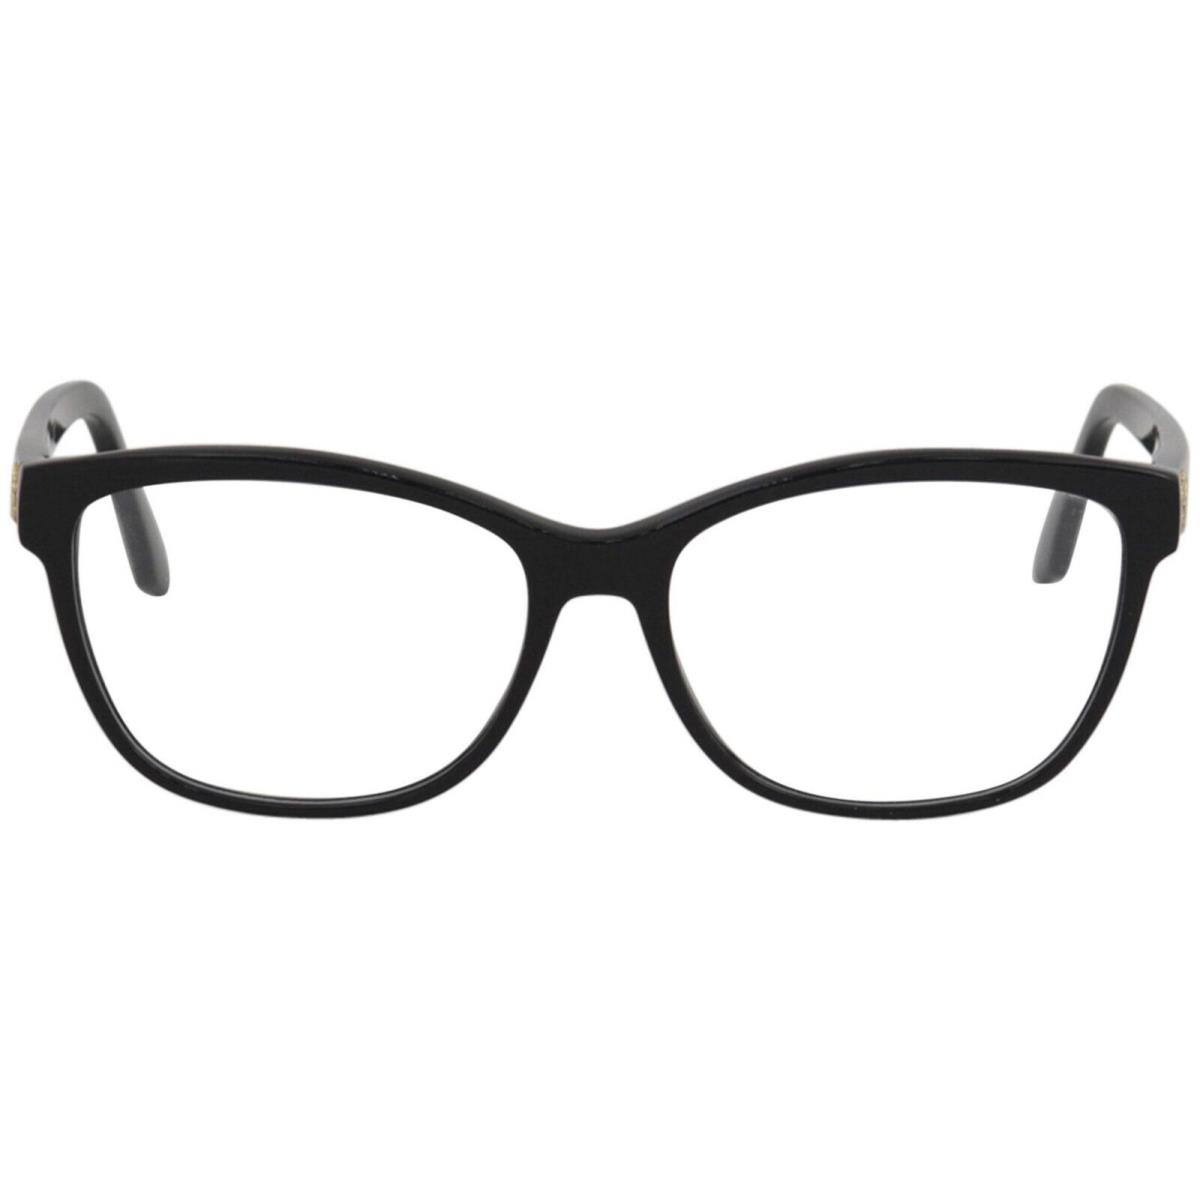 Roberto Cavalli Sirrah RC970 001 Black Plastic Eyeglasses Frame 55-15-140 RC0970 - Black, Frame: Black, Lens: Clear